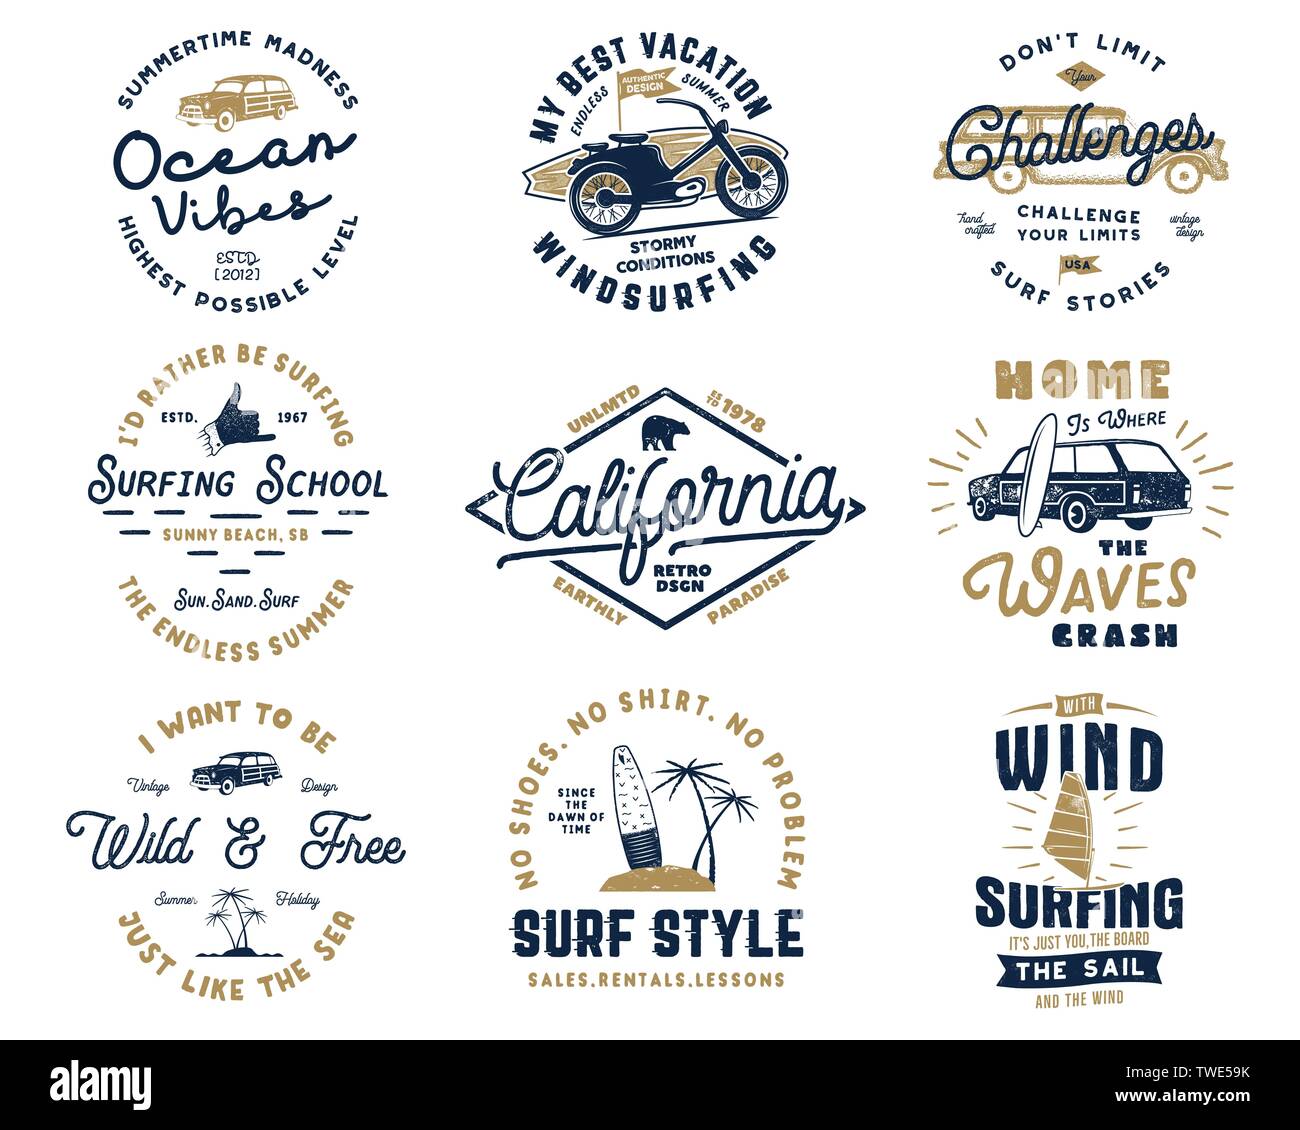 Vintage Surfing Graphics Set And Emblems For Web Design Or Print